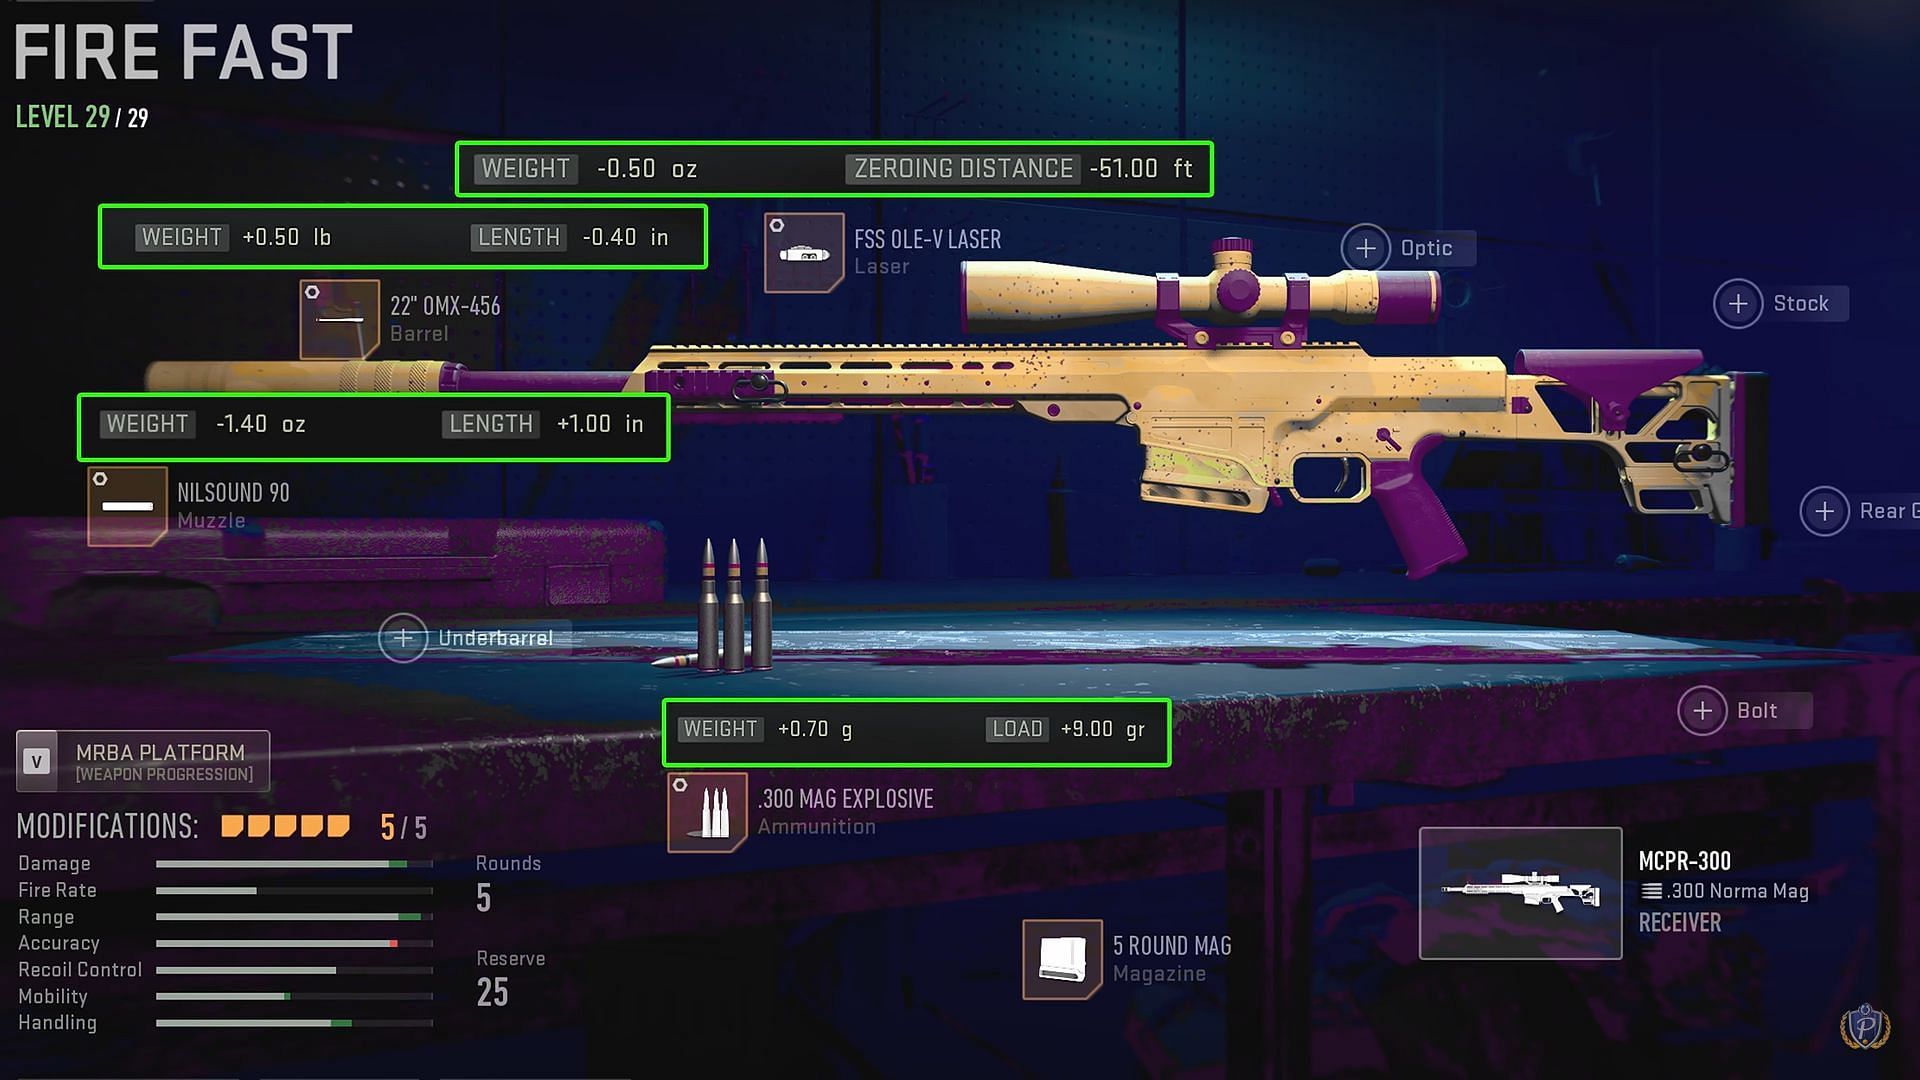 Warzone 2: One Shot Sniper Best Loadout 